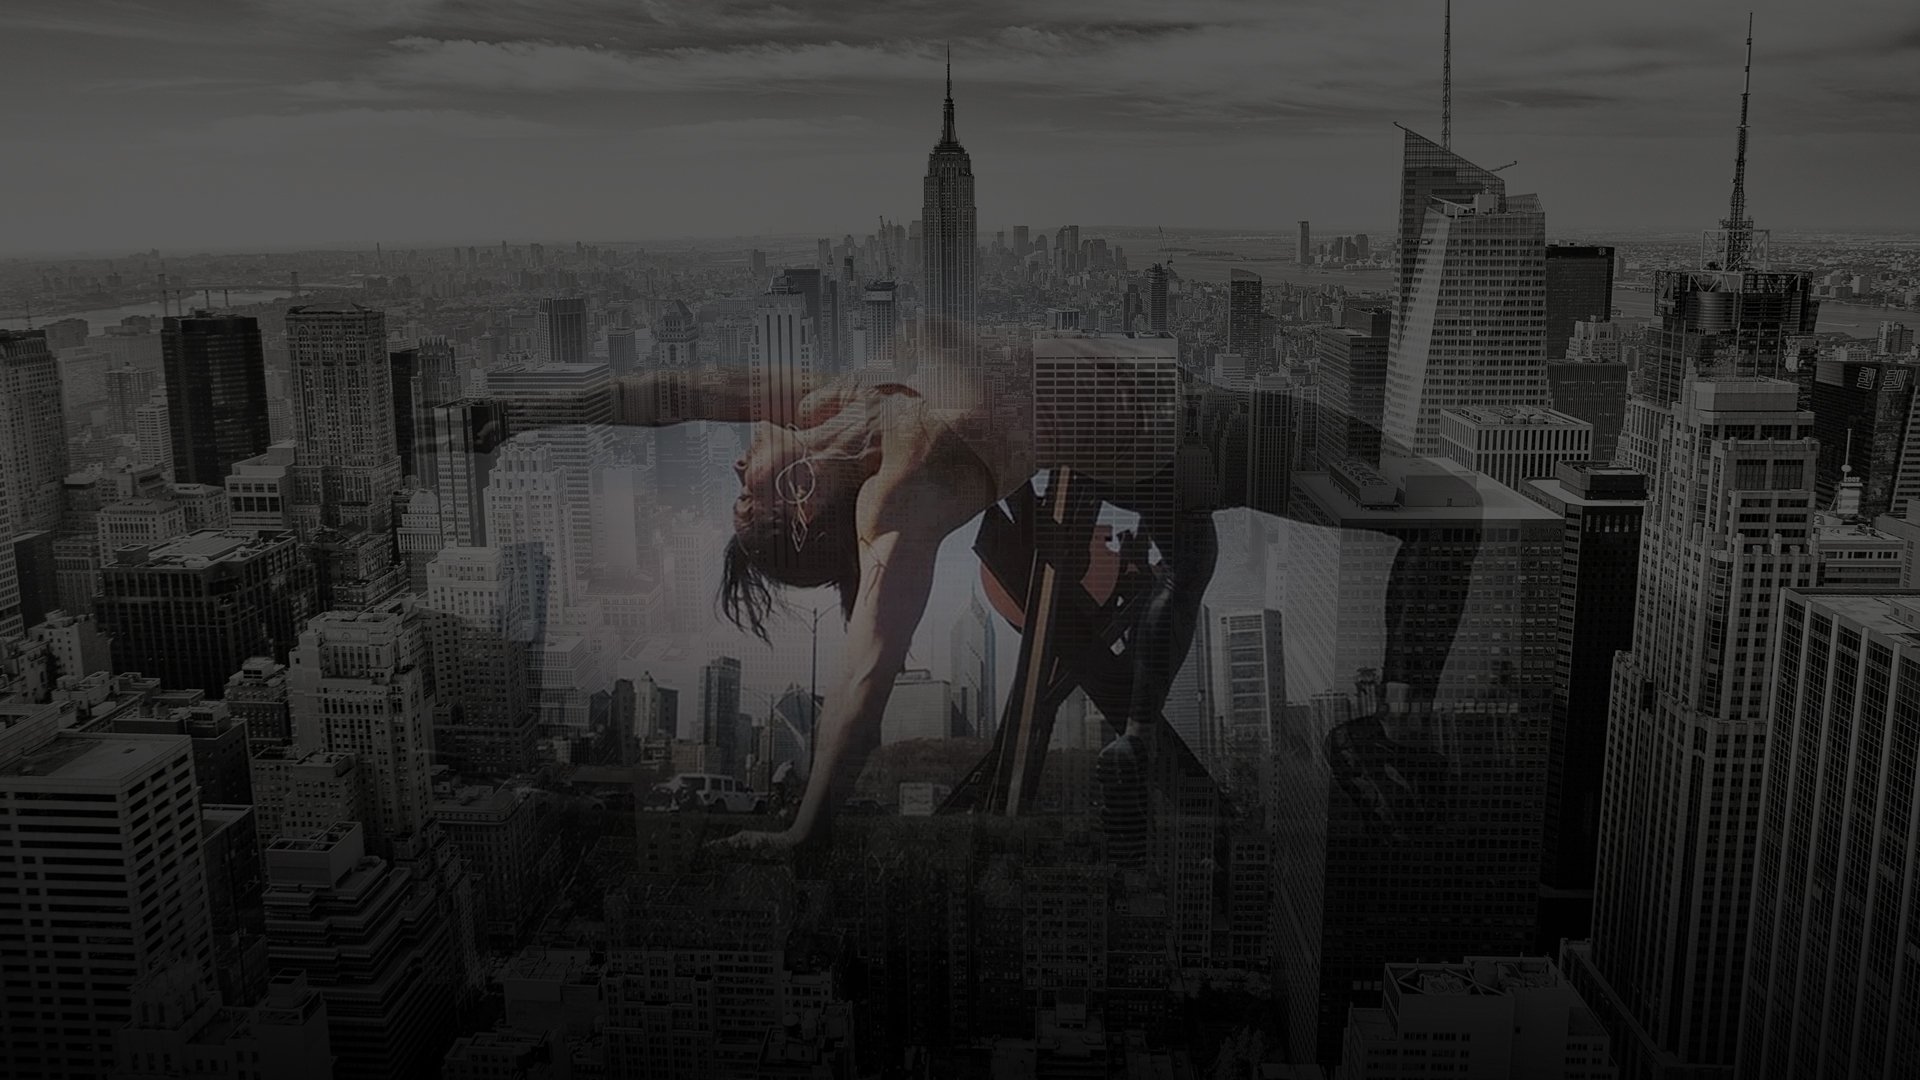 Lisa Marie Kocsos | Pilates & Posture, NYC Personal Training Image